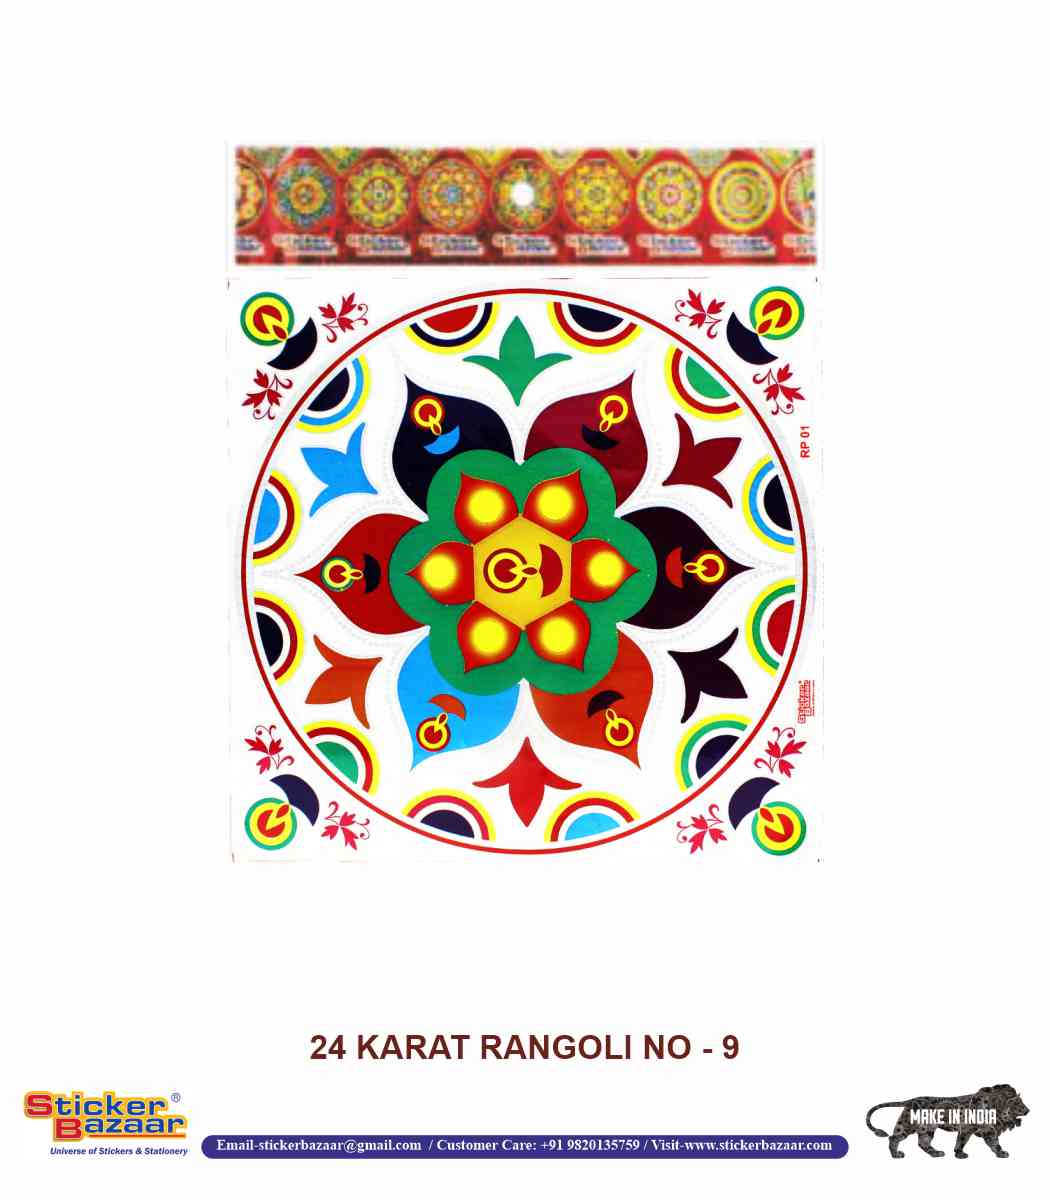 Sticker Bazaar 24 Karat Rangoli KR9 with Header